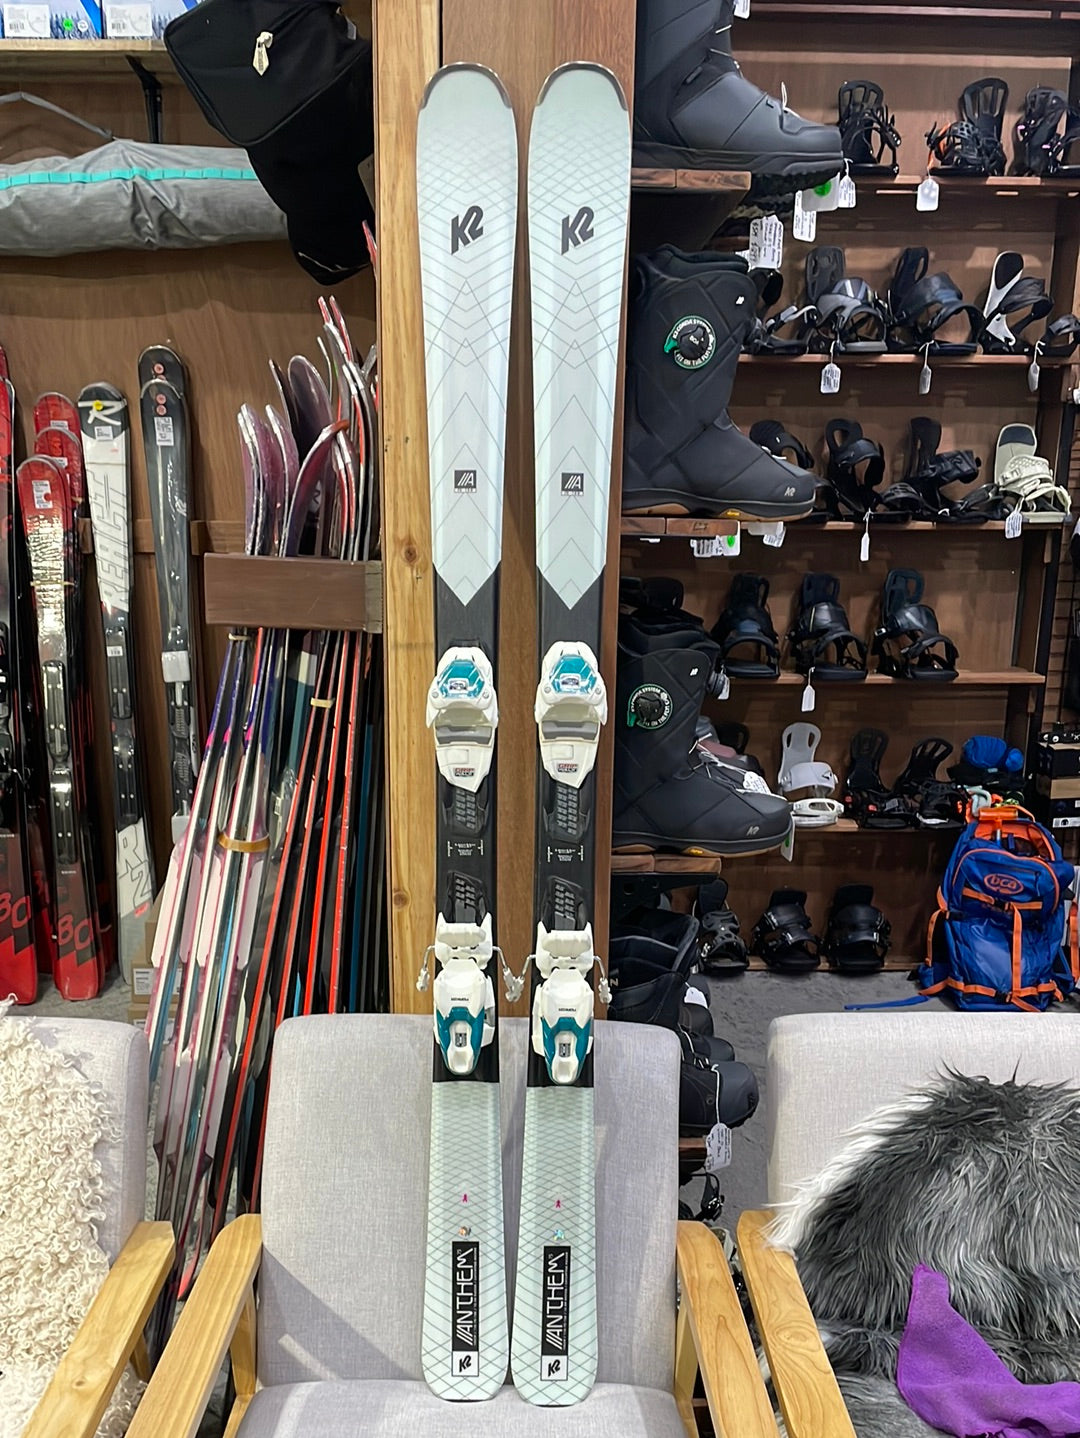 Skis K2 Anthem 75 156cm White Includes Bindings